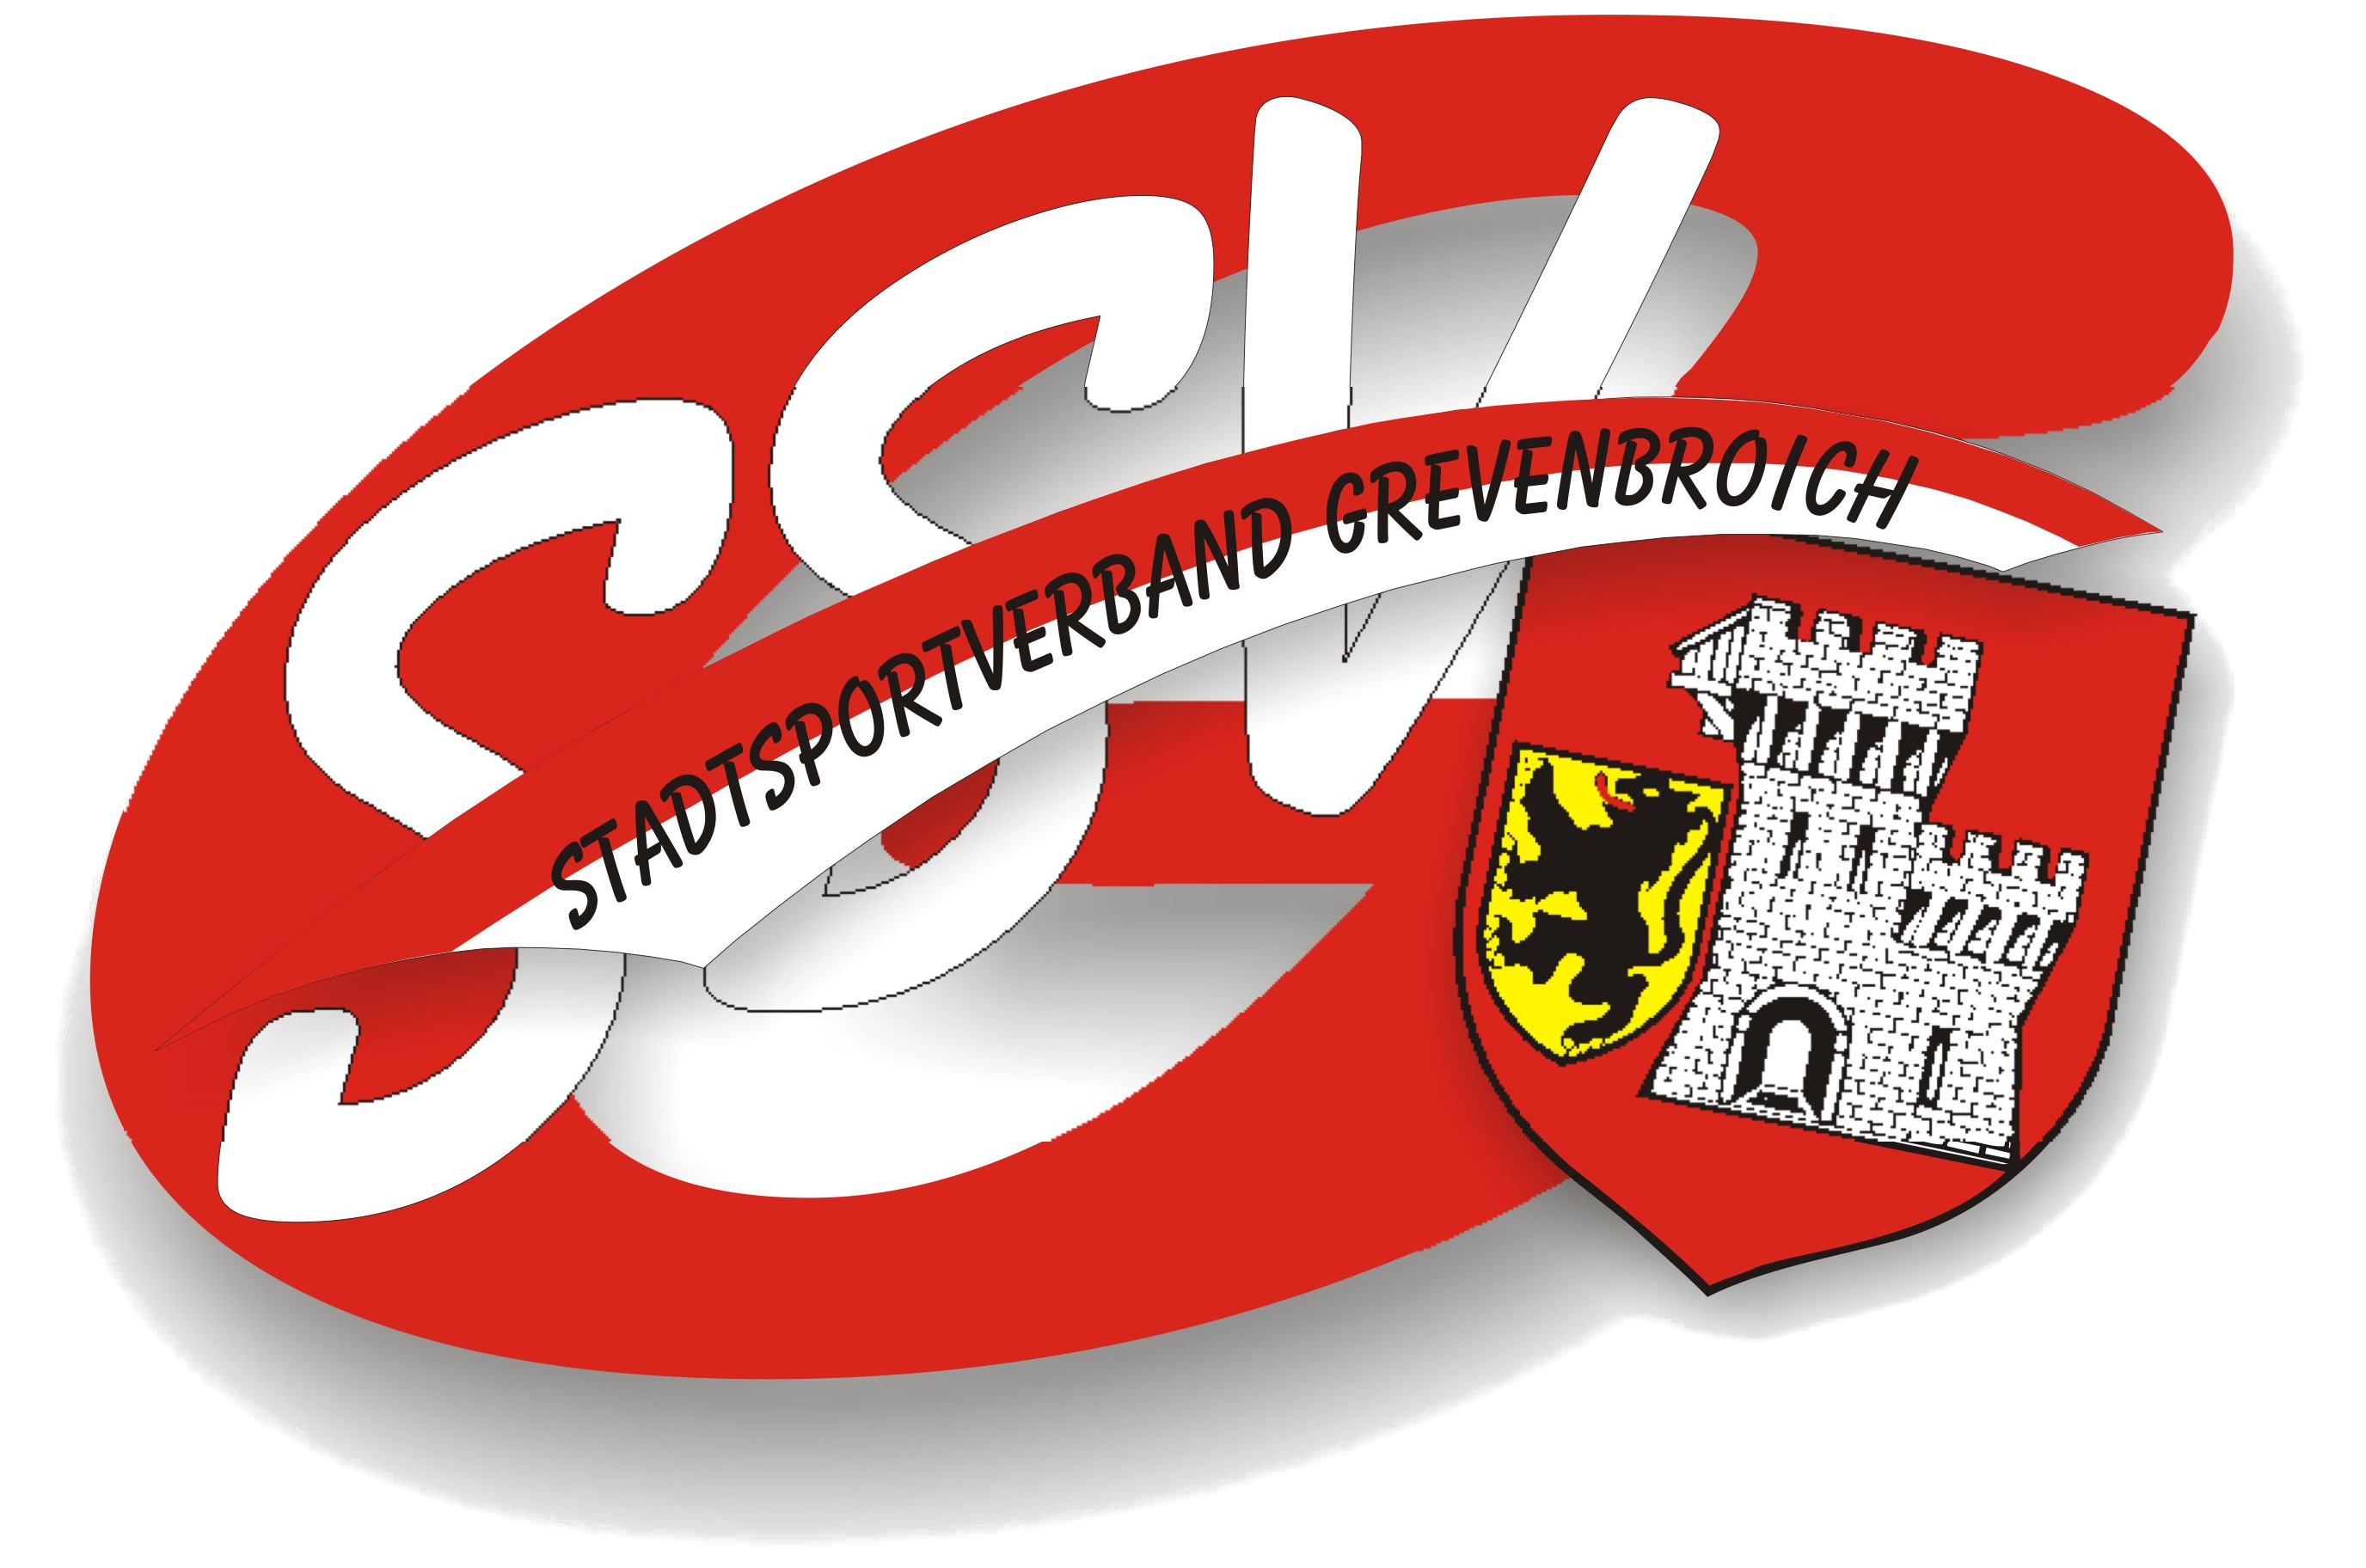 StadtSportVerband Grevenbroich e.V.